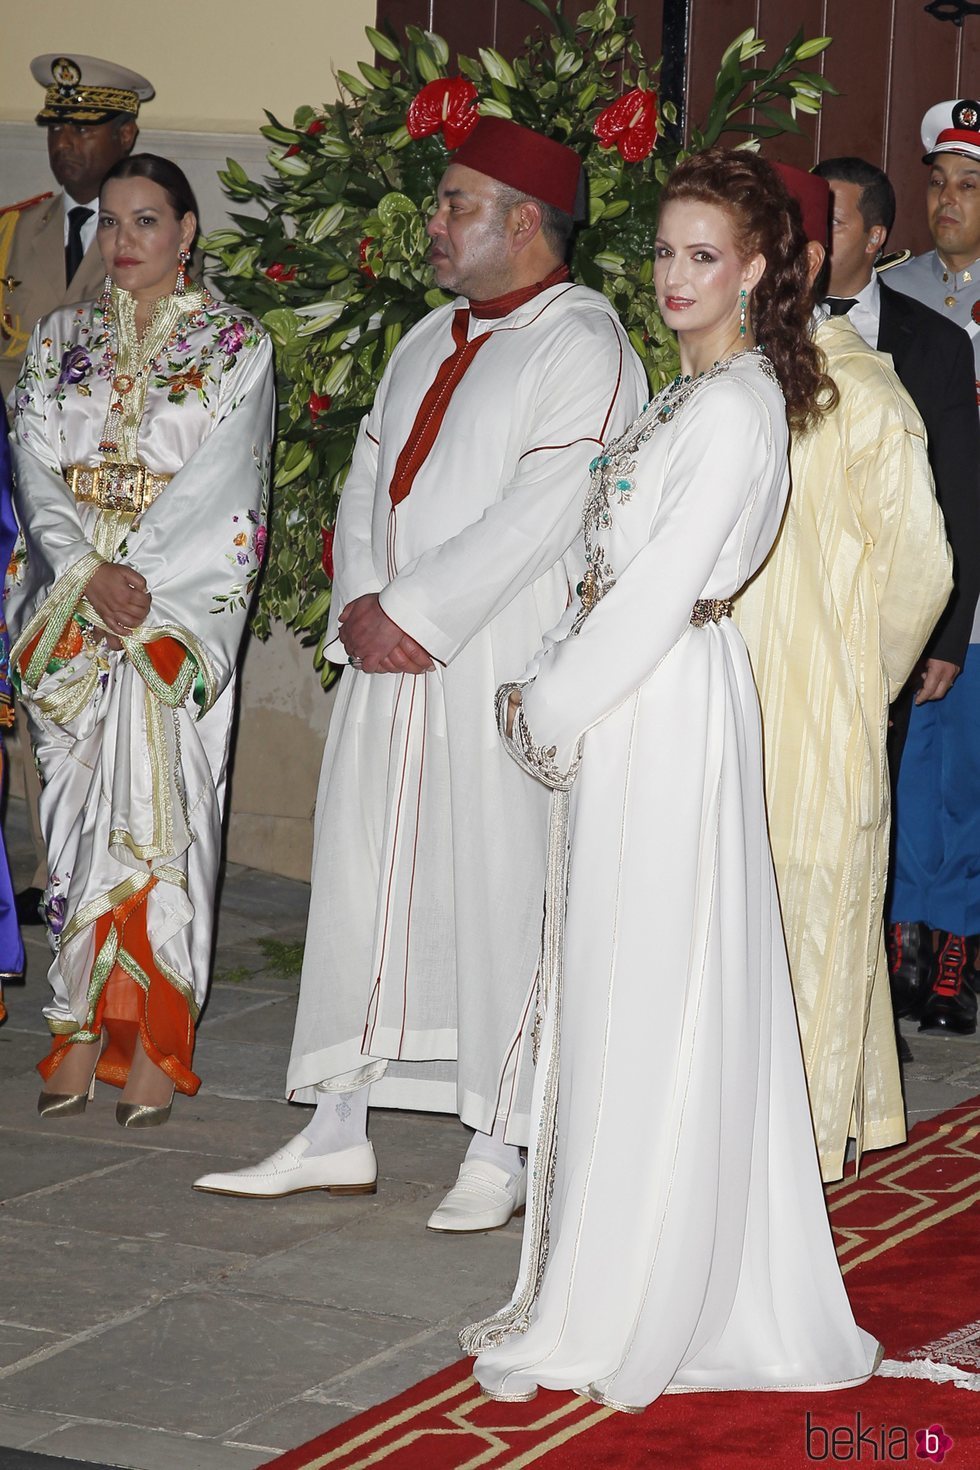 El rey Mohamed VI, junto a Lalla Salma de Marruecos en un acto oficial